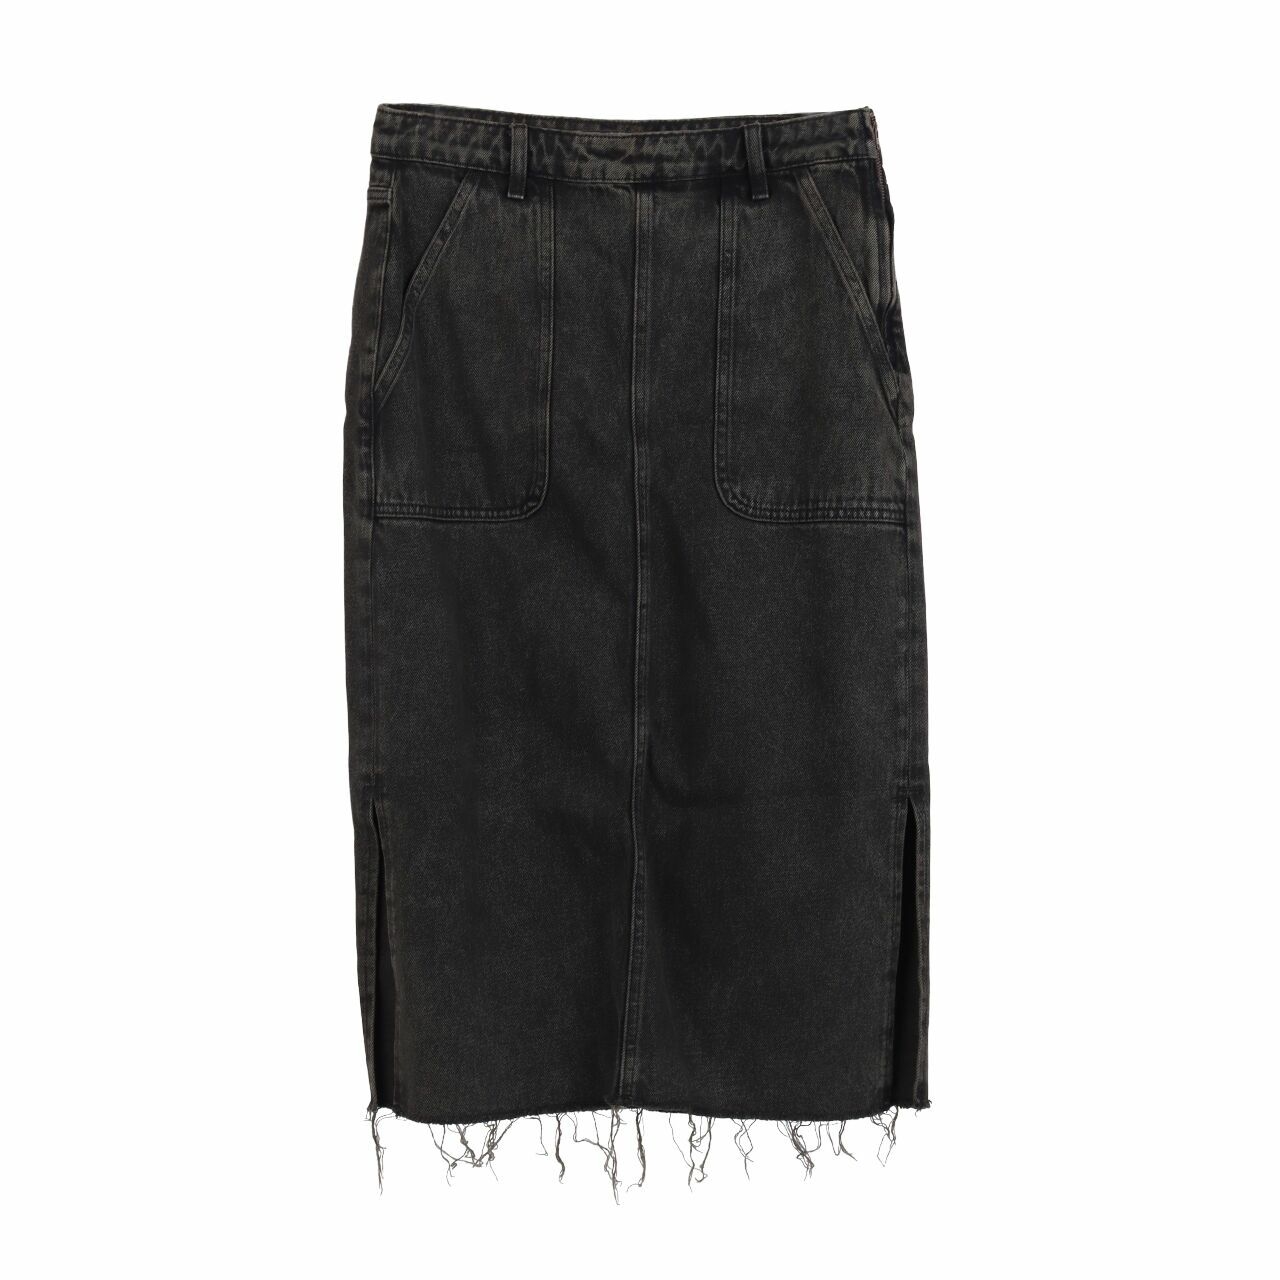 Zara Olive Midi Skirt